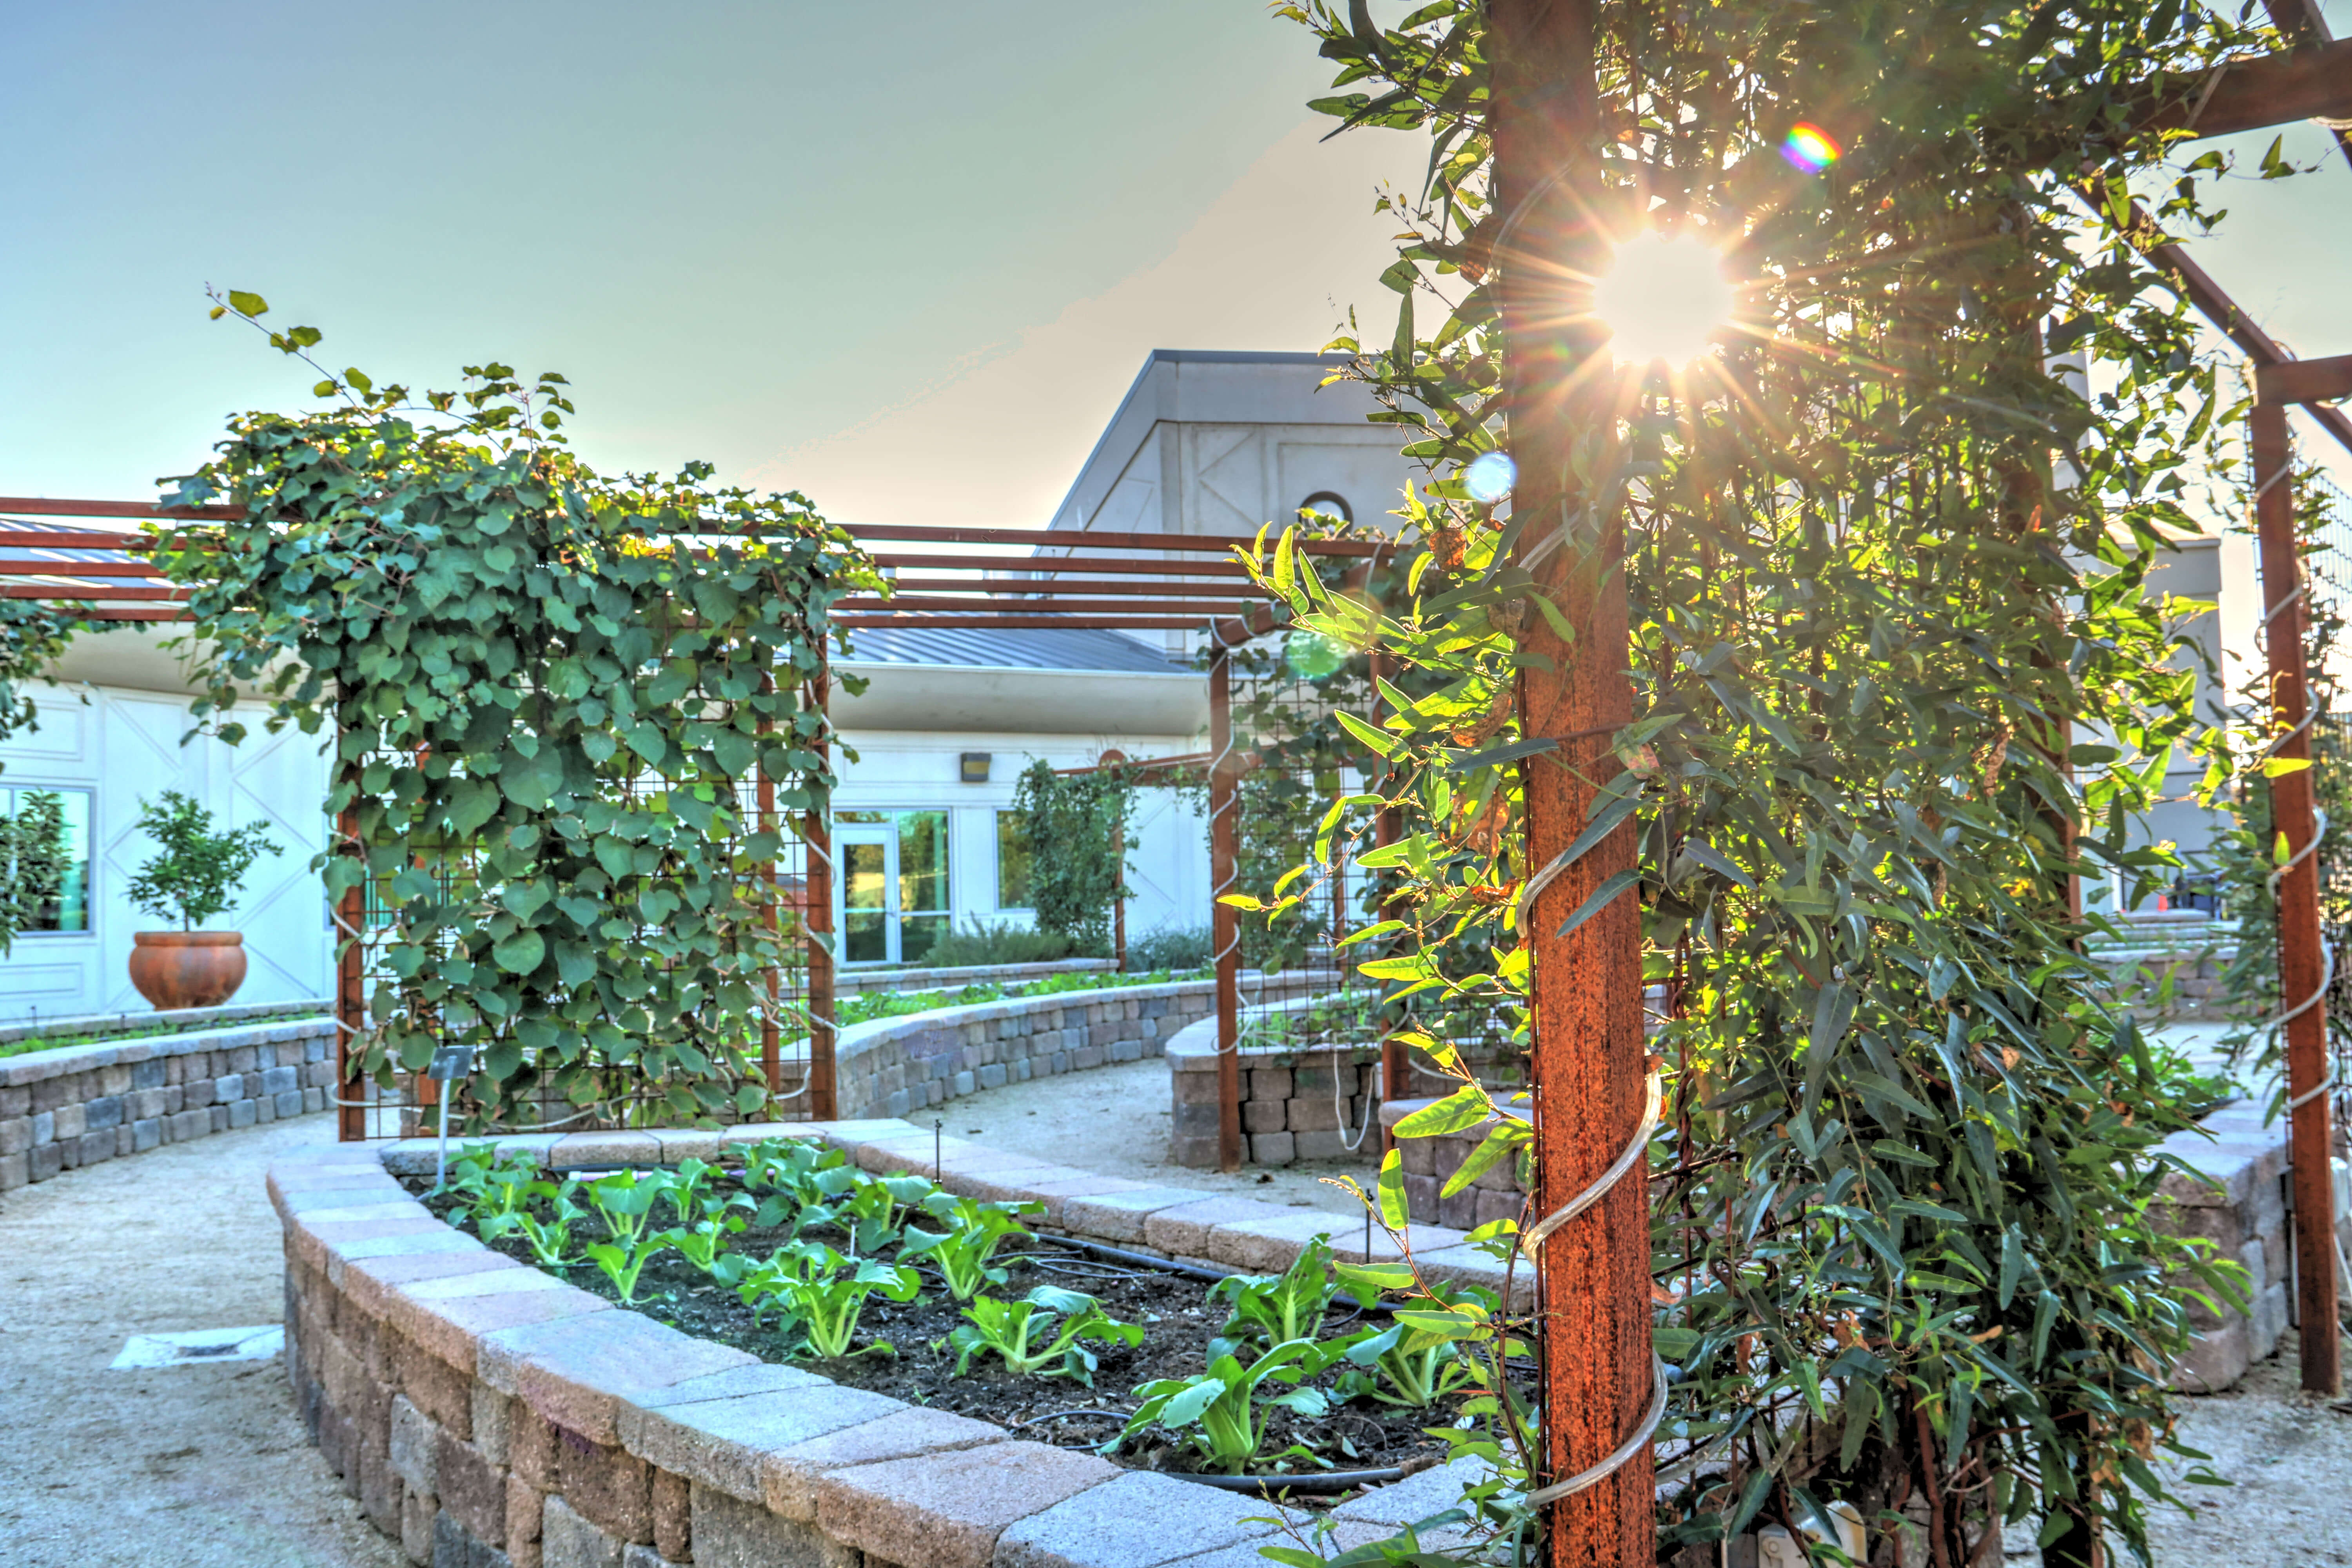 The sun shines over Sacramento State's community garden